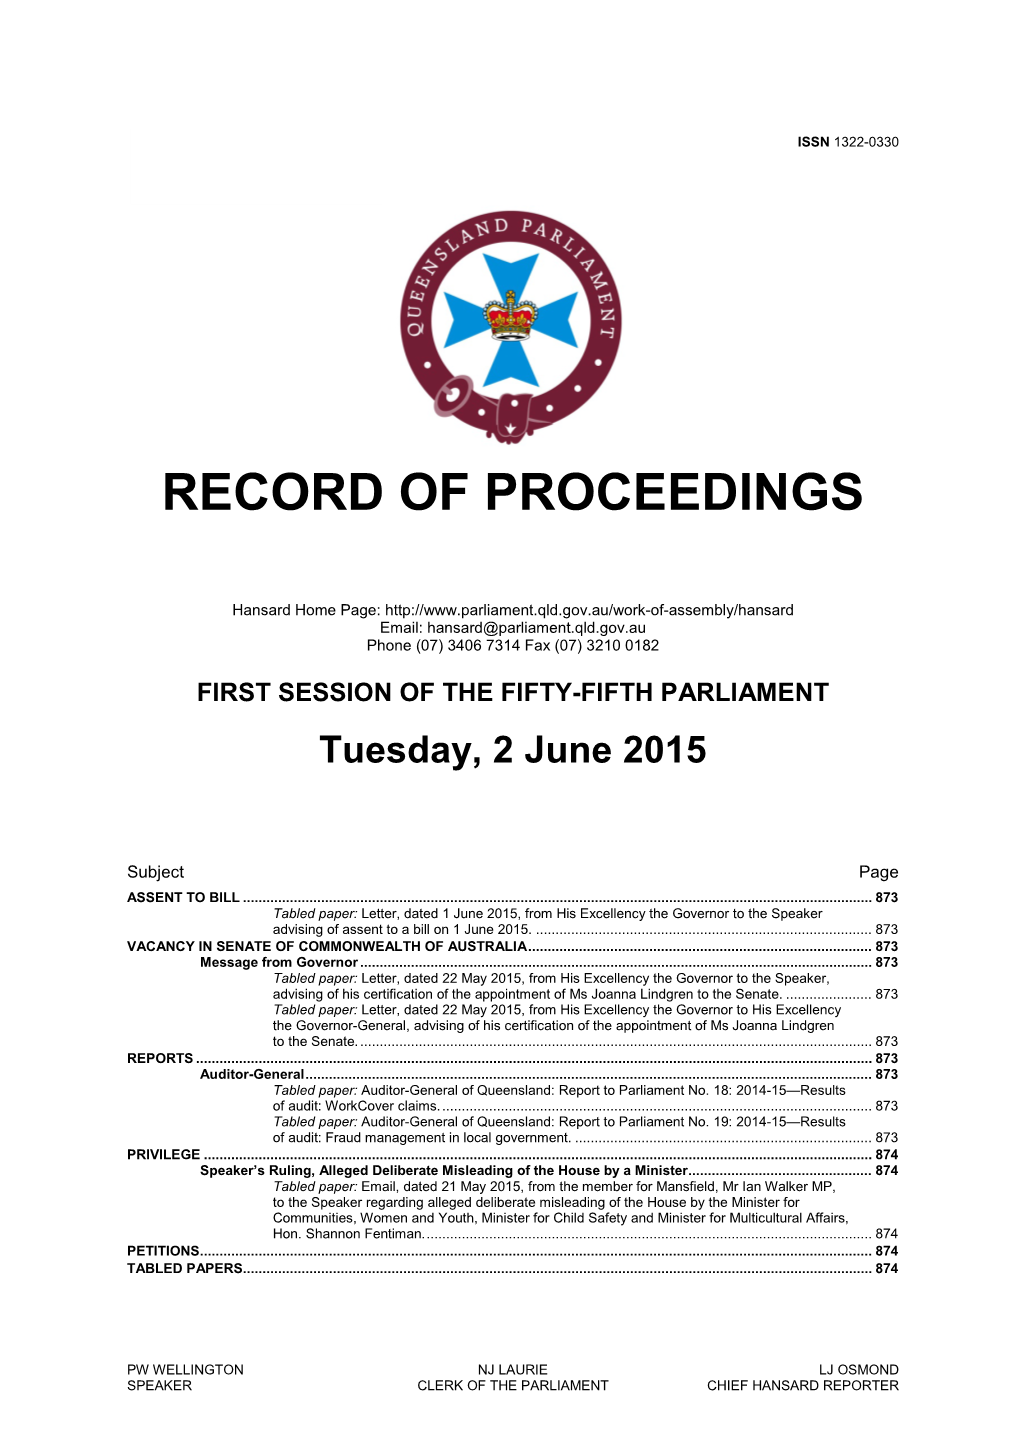 Final Report, 1 June 2015